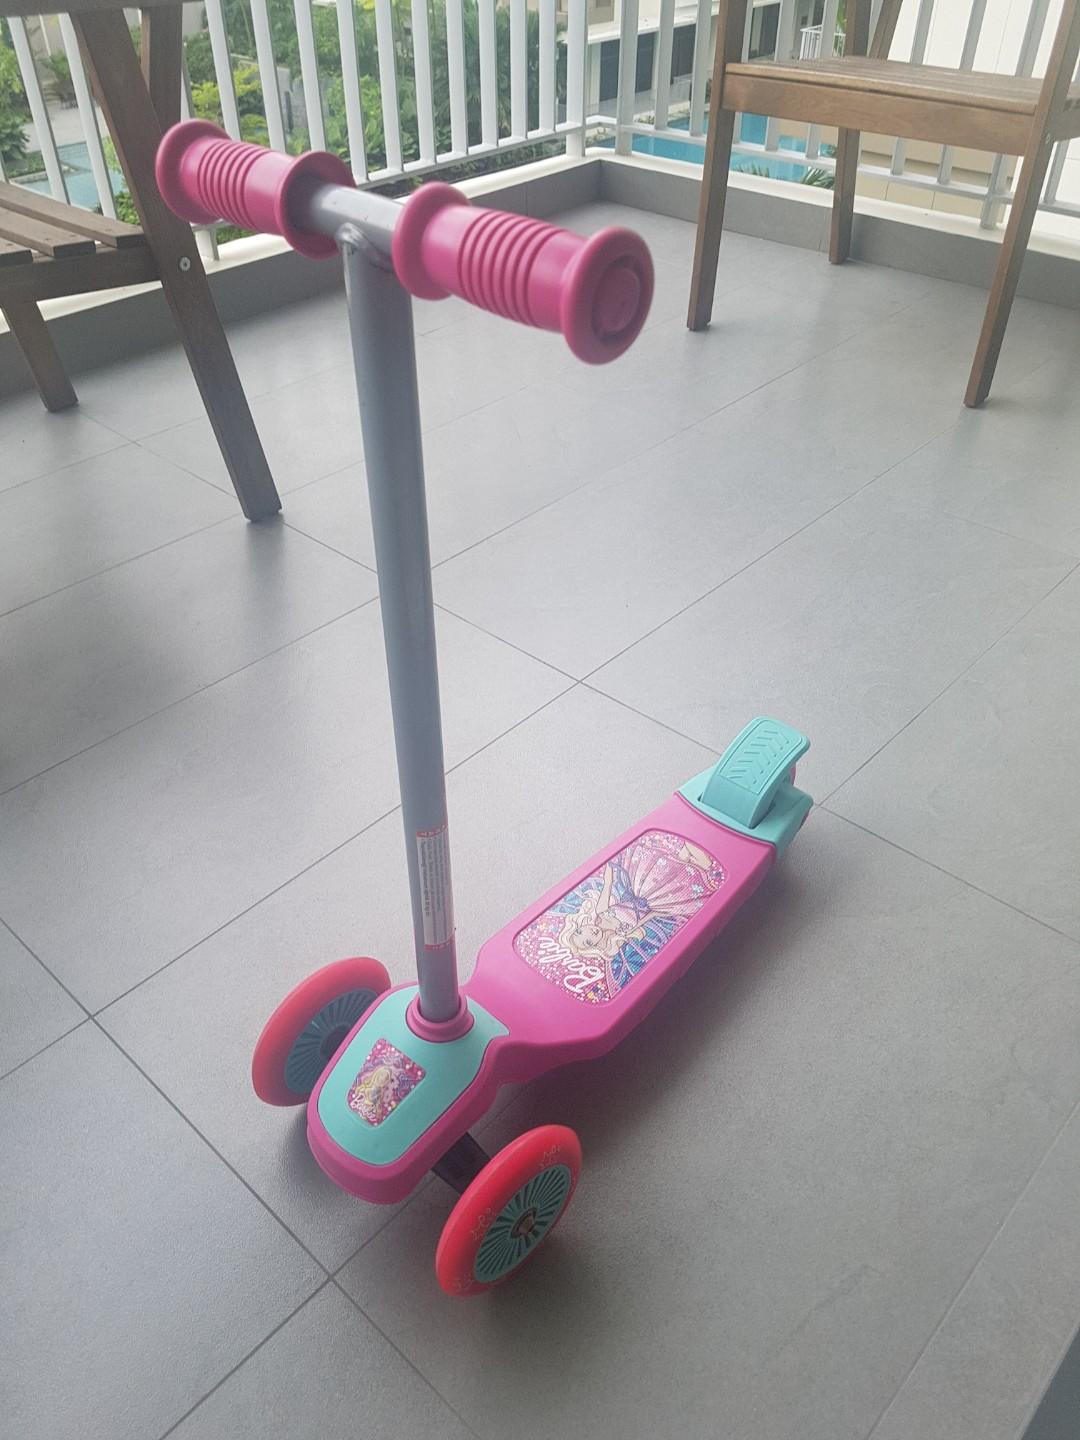 barbie kids scooter